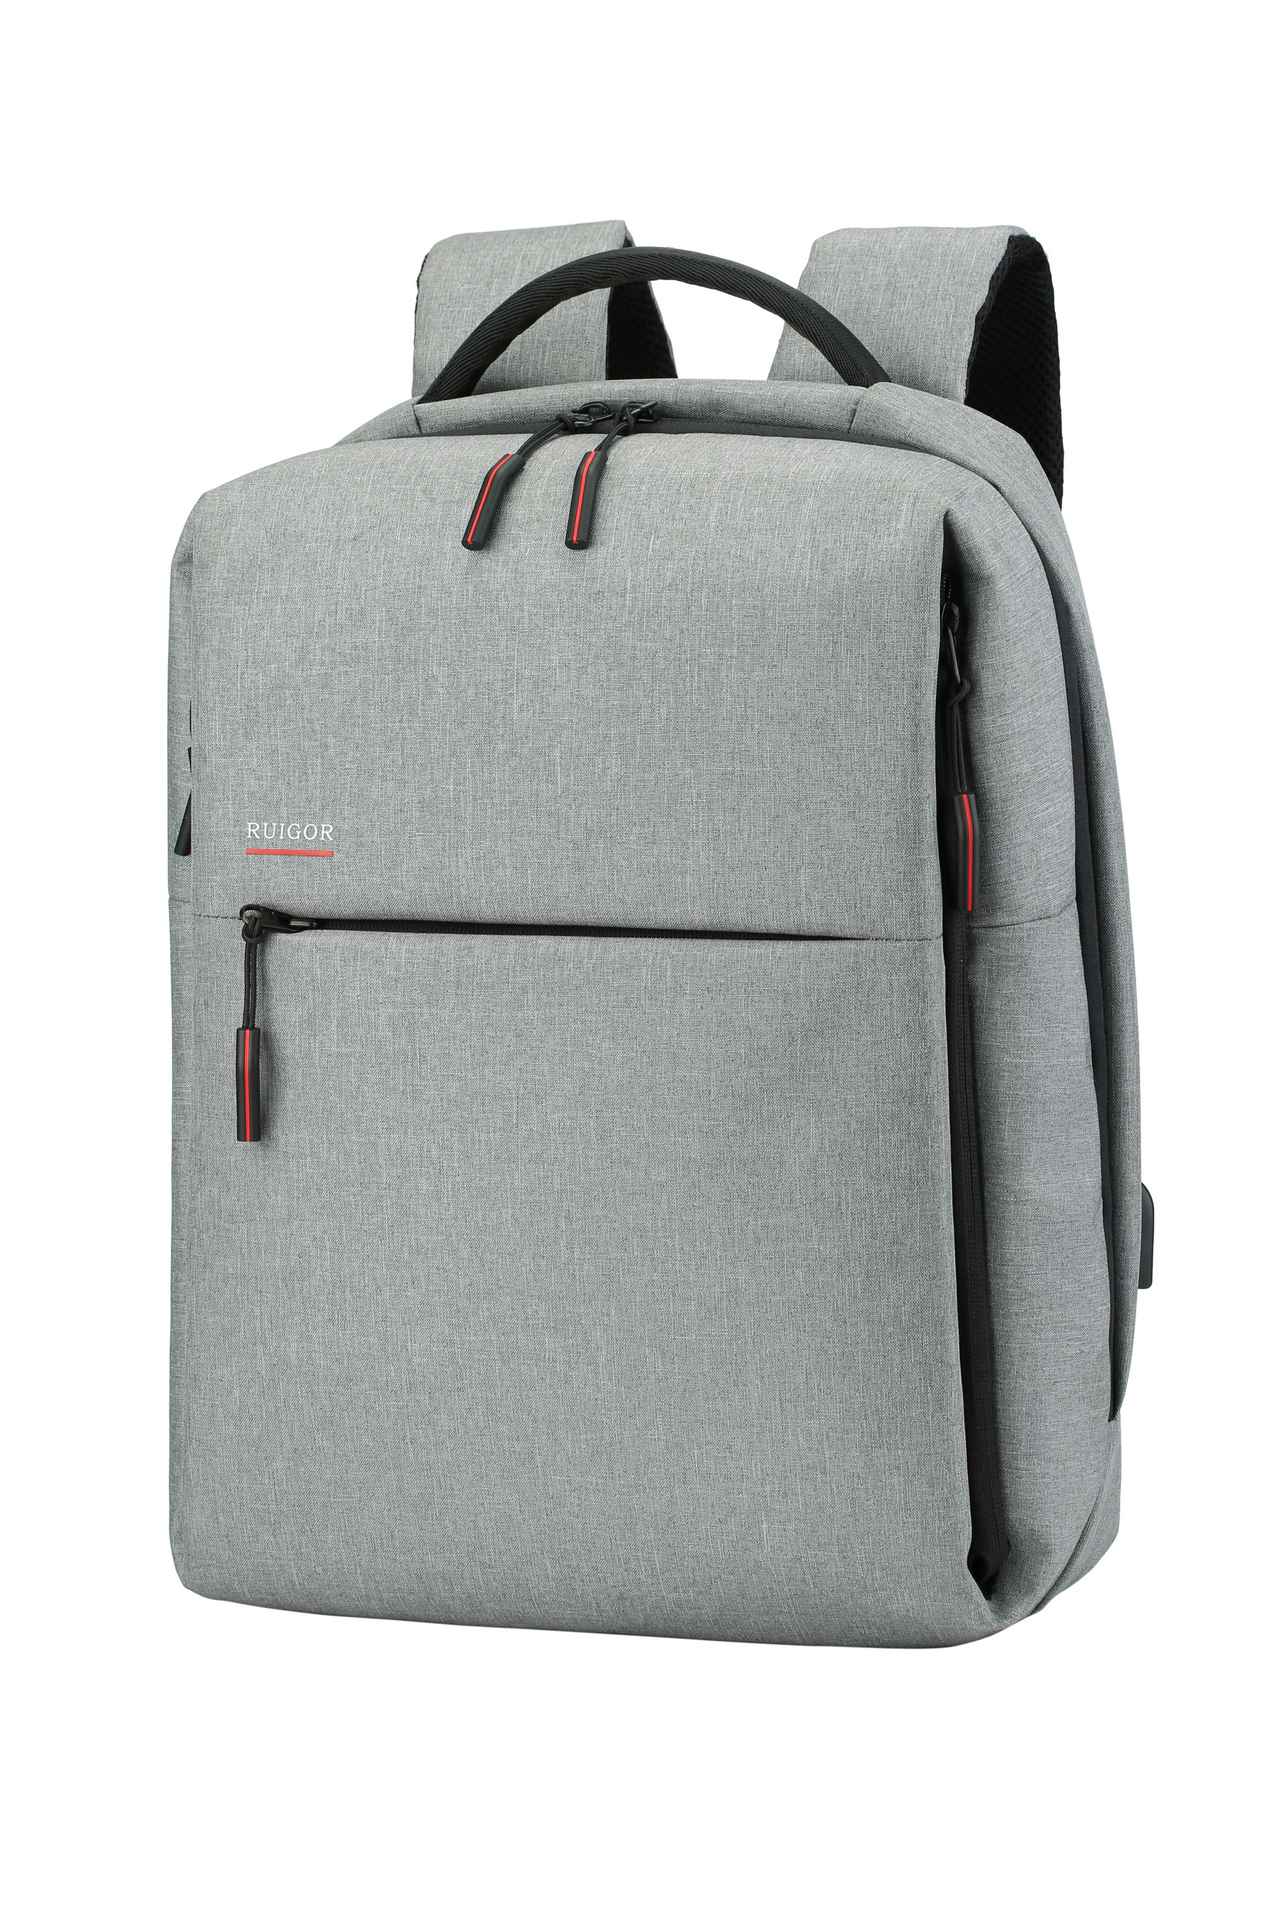 RUIGOR CITY 56 Laptop Backpack Grey